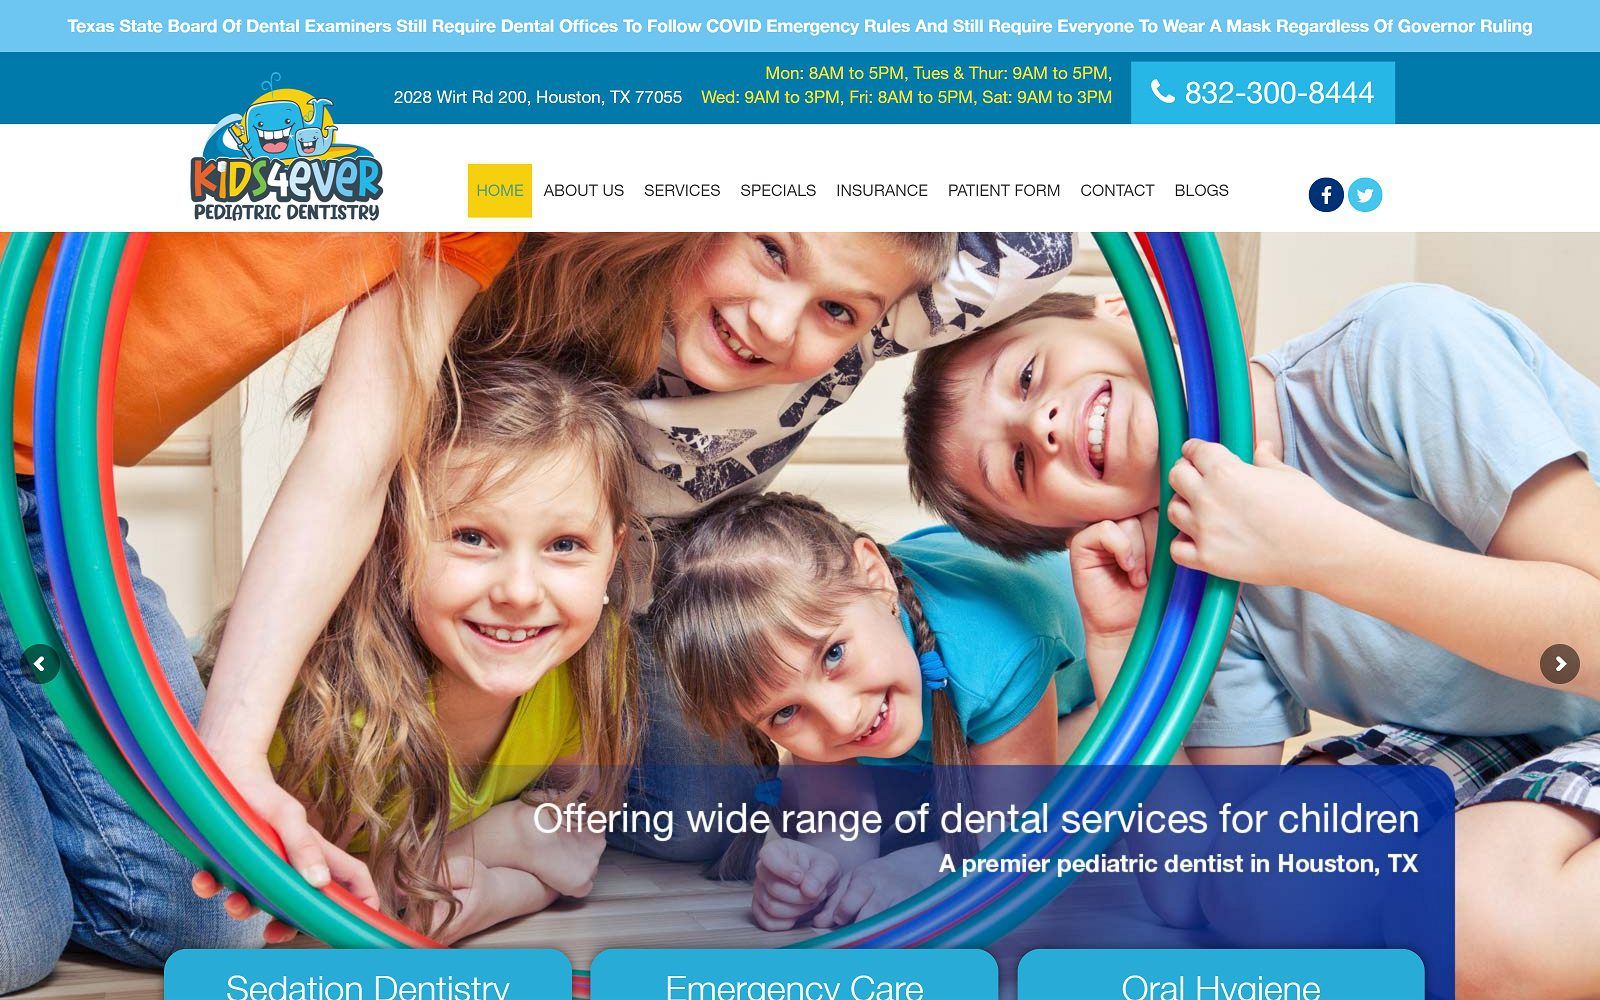 The screenshot of kids 4ever pediatric dentistry website